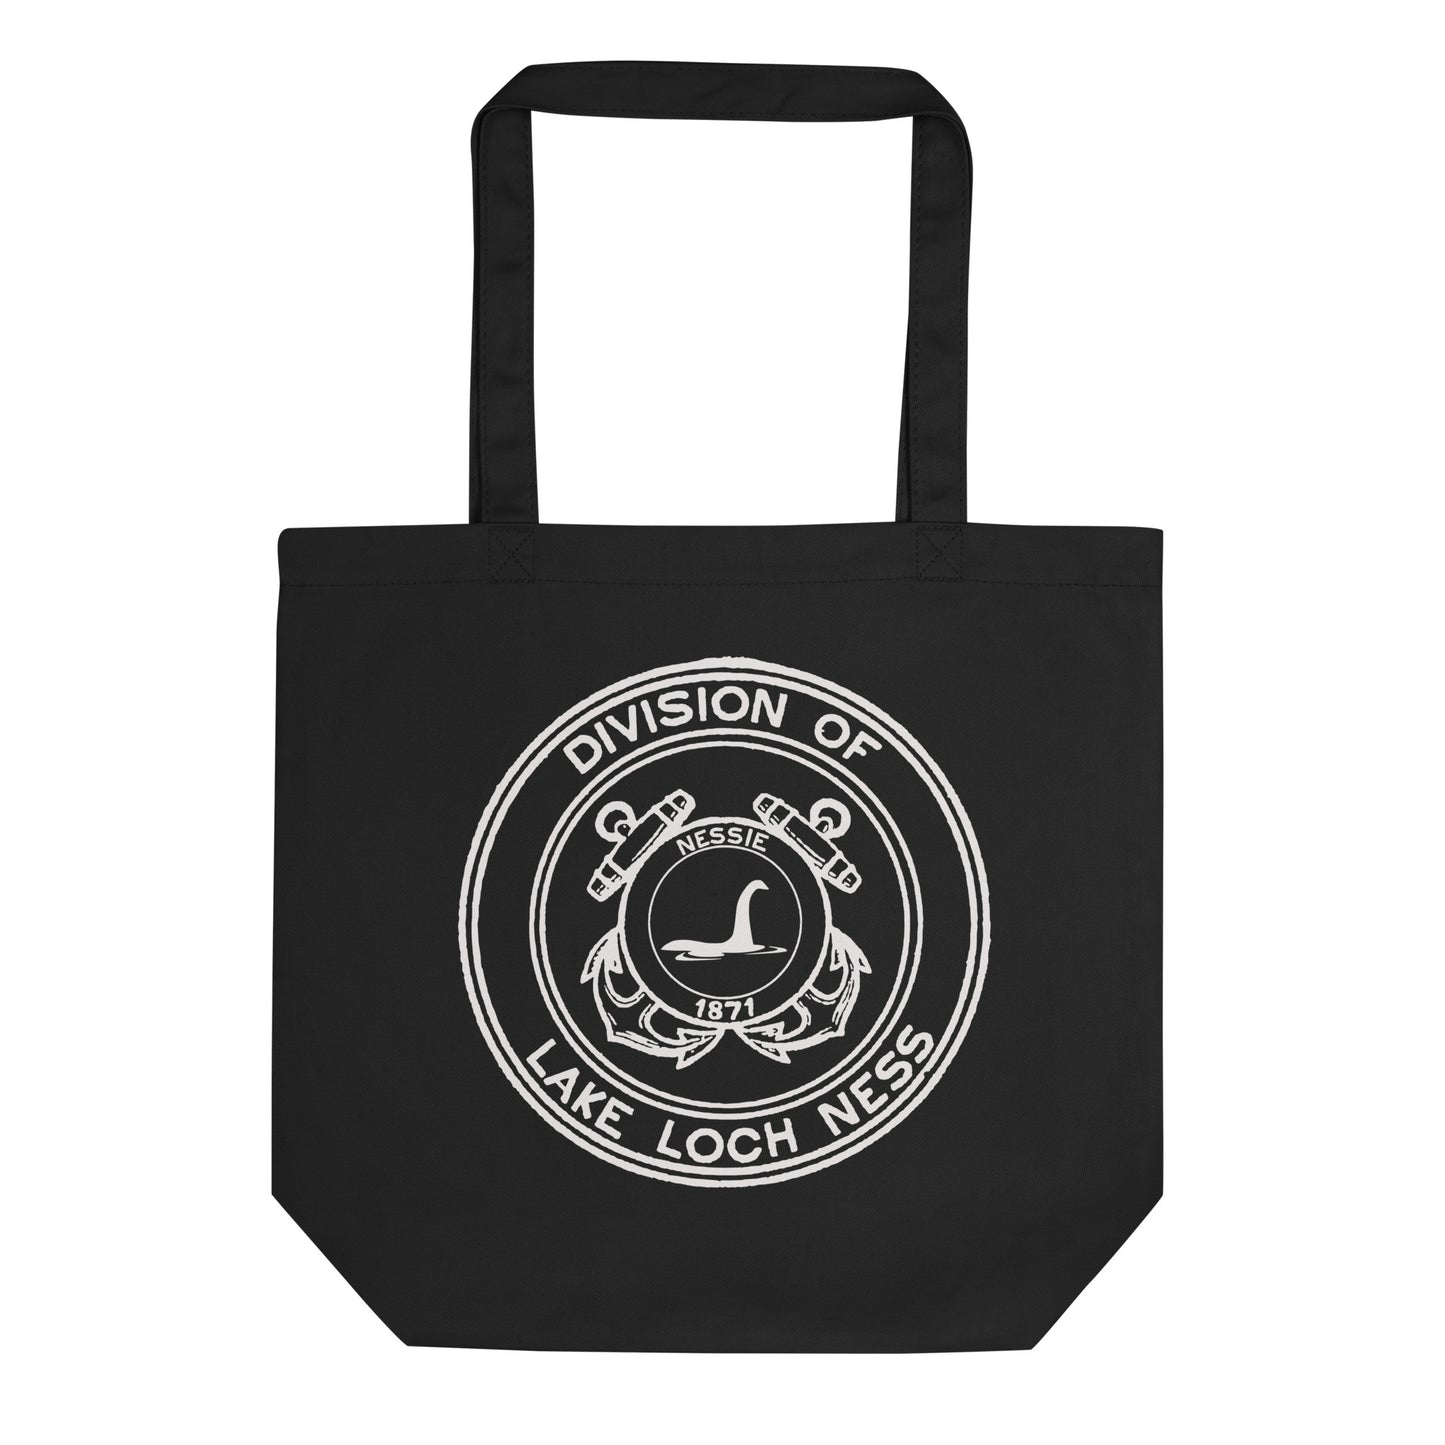 Loch Ness Monster - Eco Tote Bag - Black